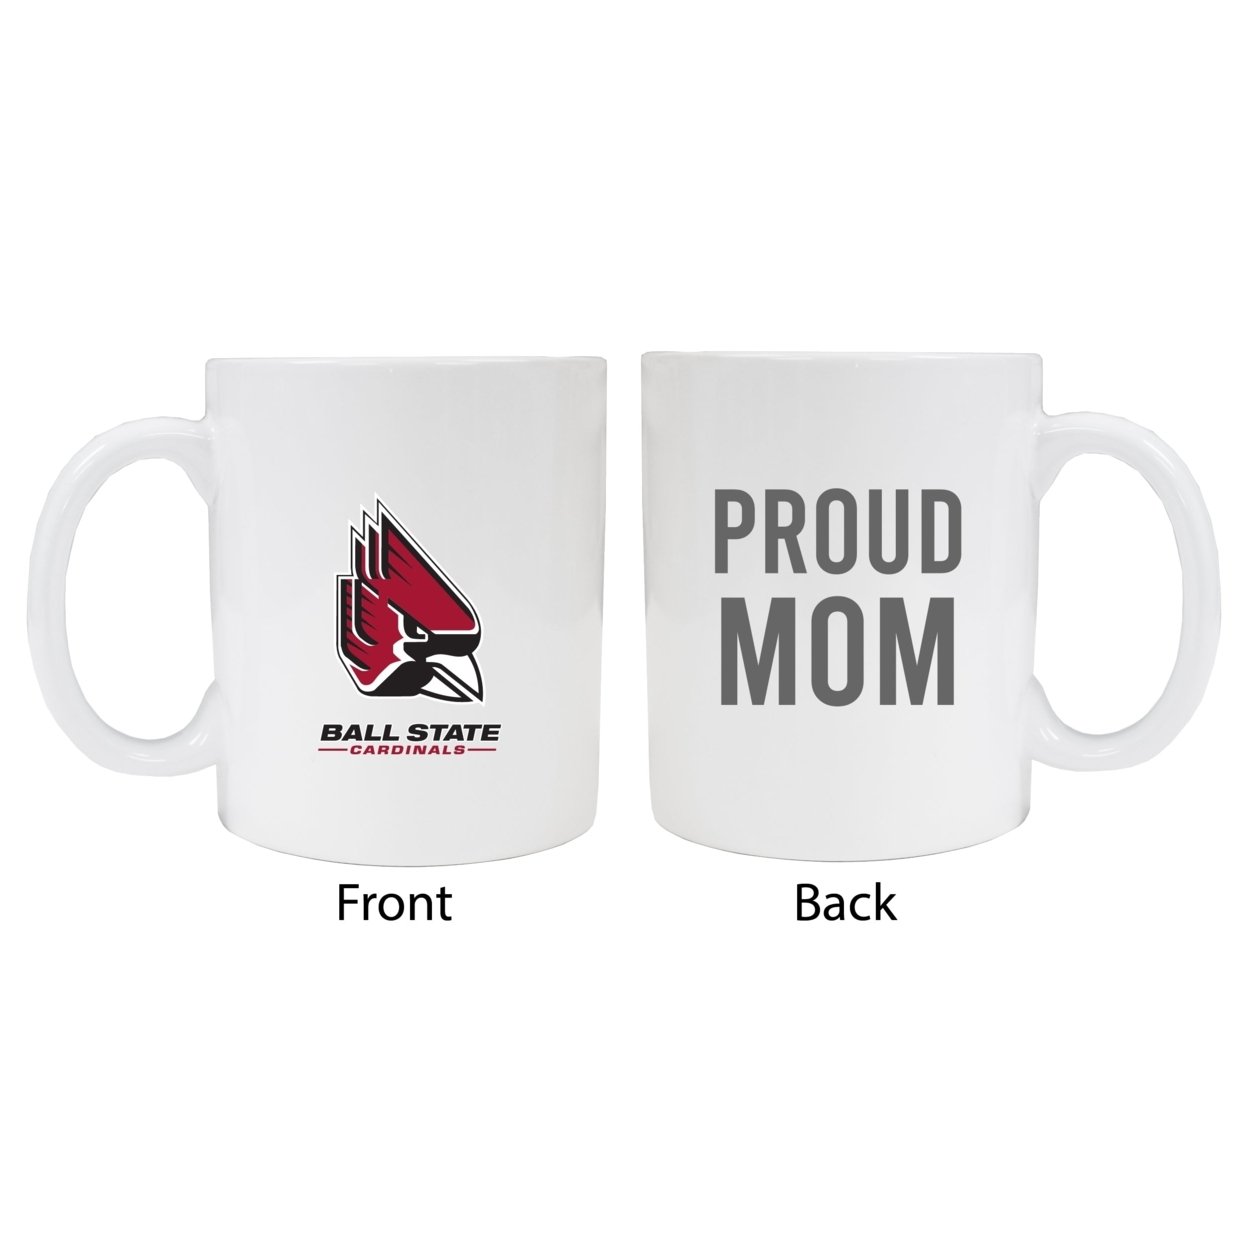 Ball State University Proud Mom White Ceramic Coffee Mug - White (2 Pack)